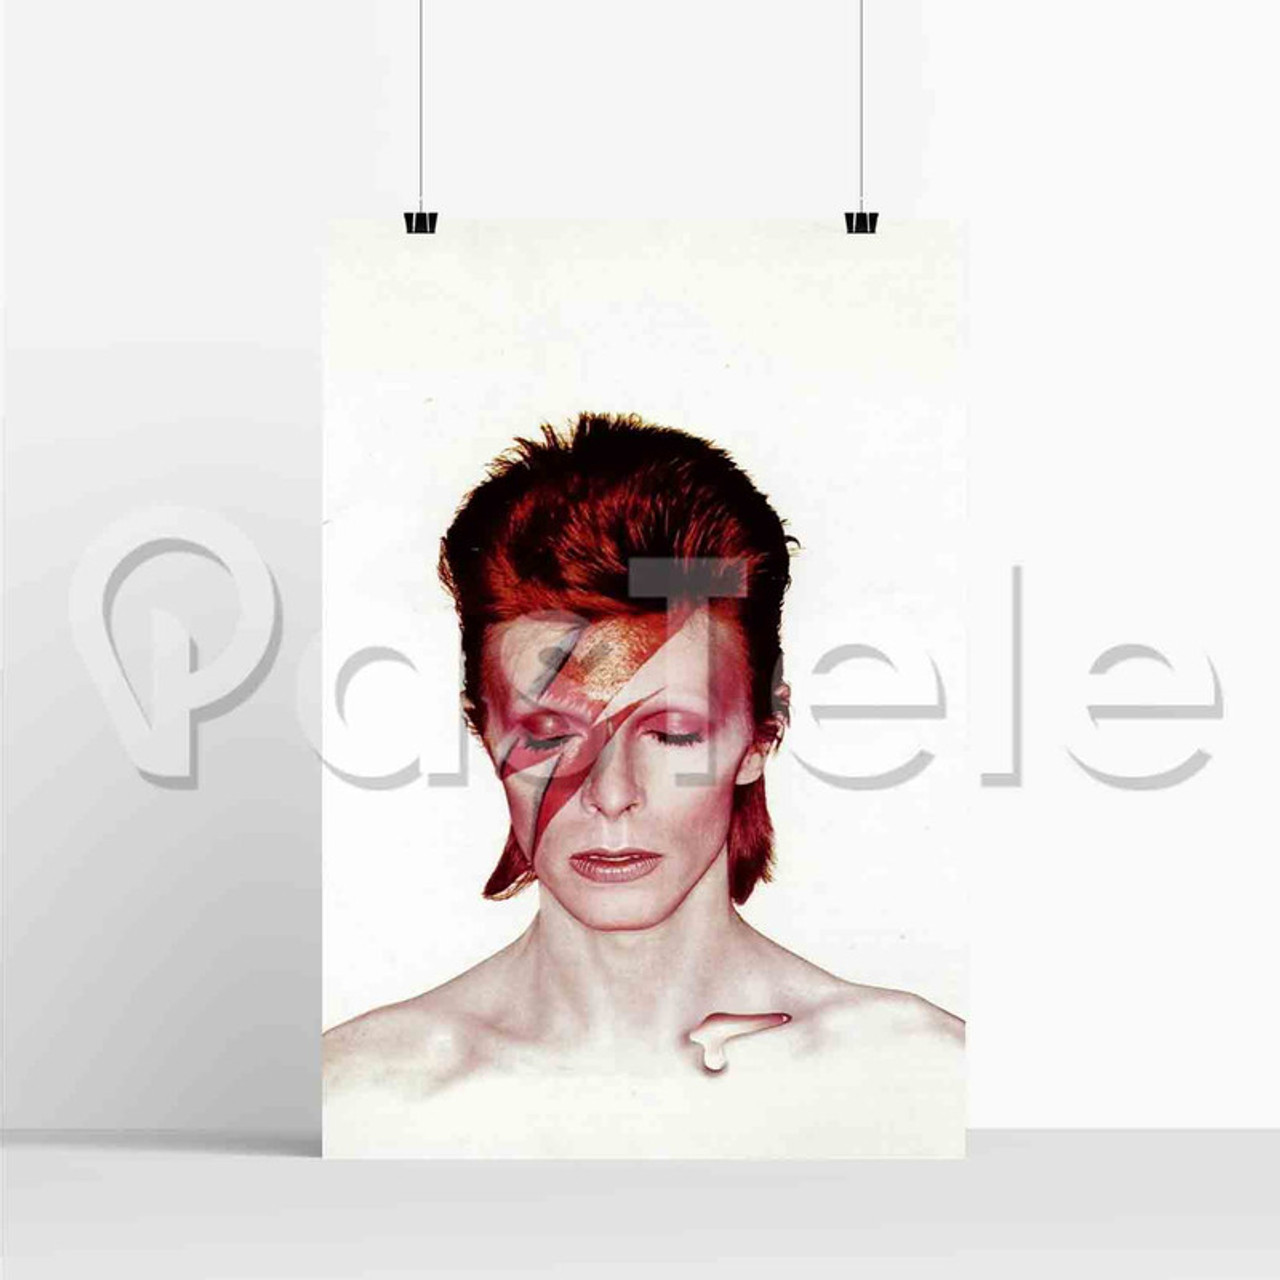 David Bowie Posters & Wall Art Prints